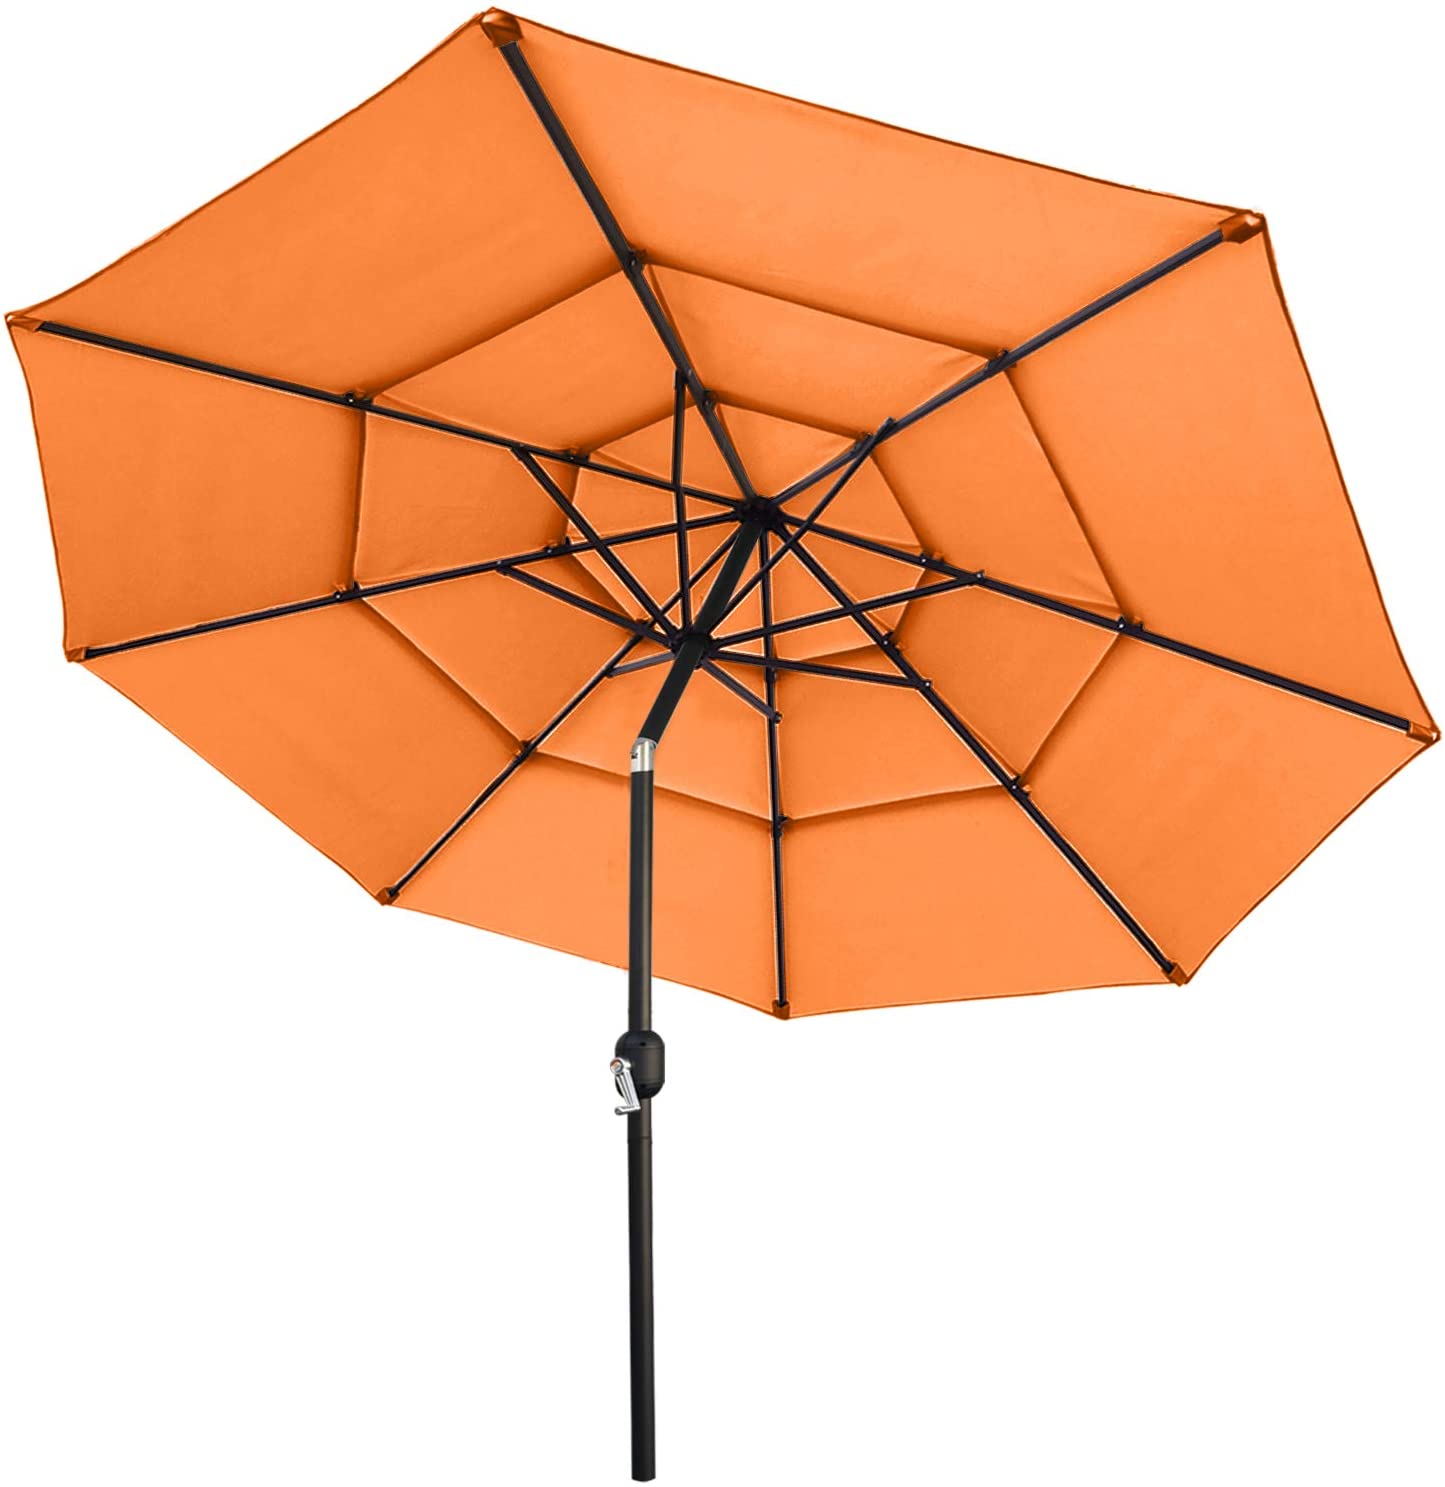 3 Tiers Market Umbrella Patio Umbrella Outdoor Table Umbrella - ABC-CANOPY